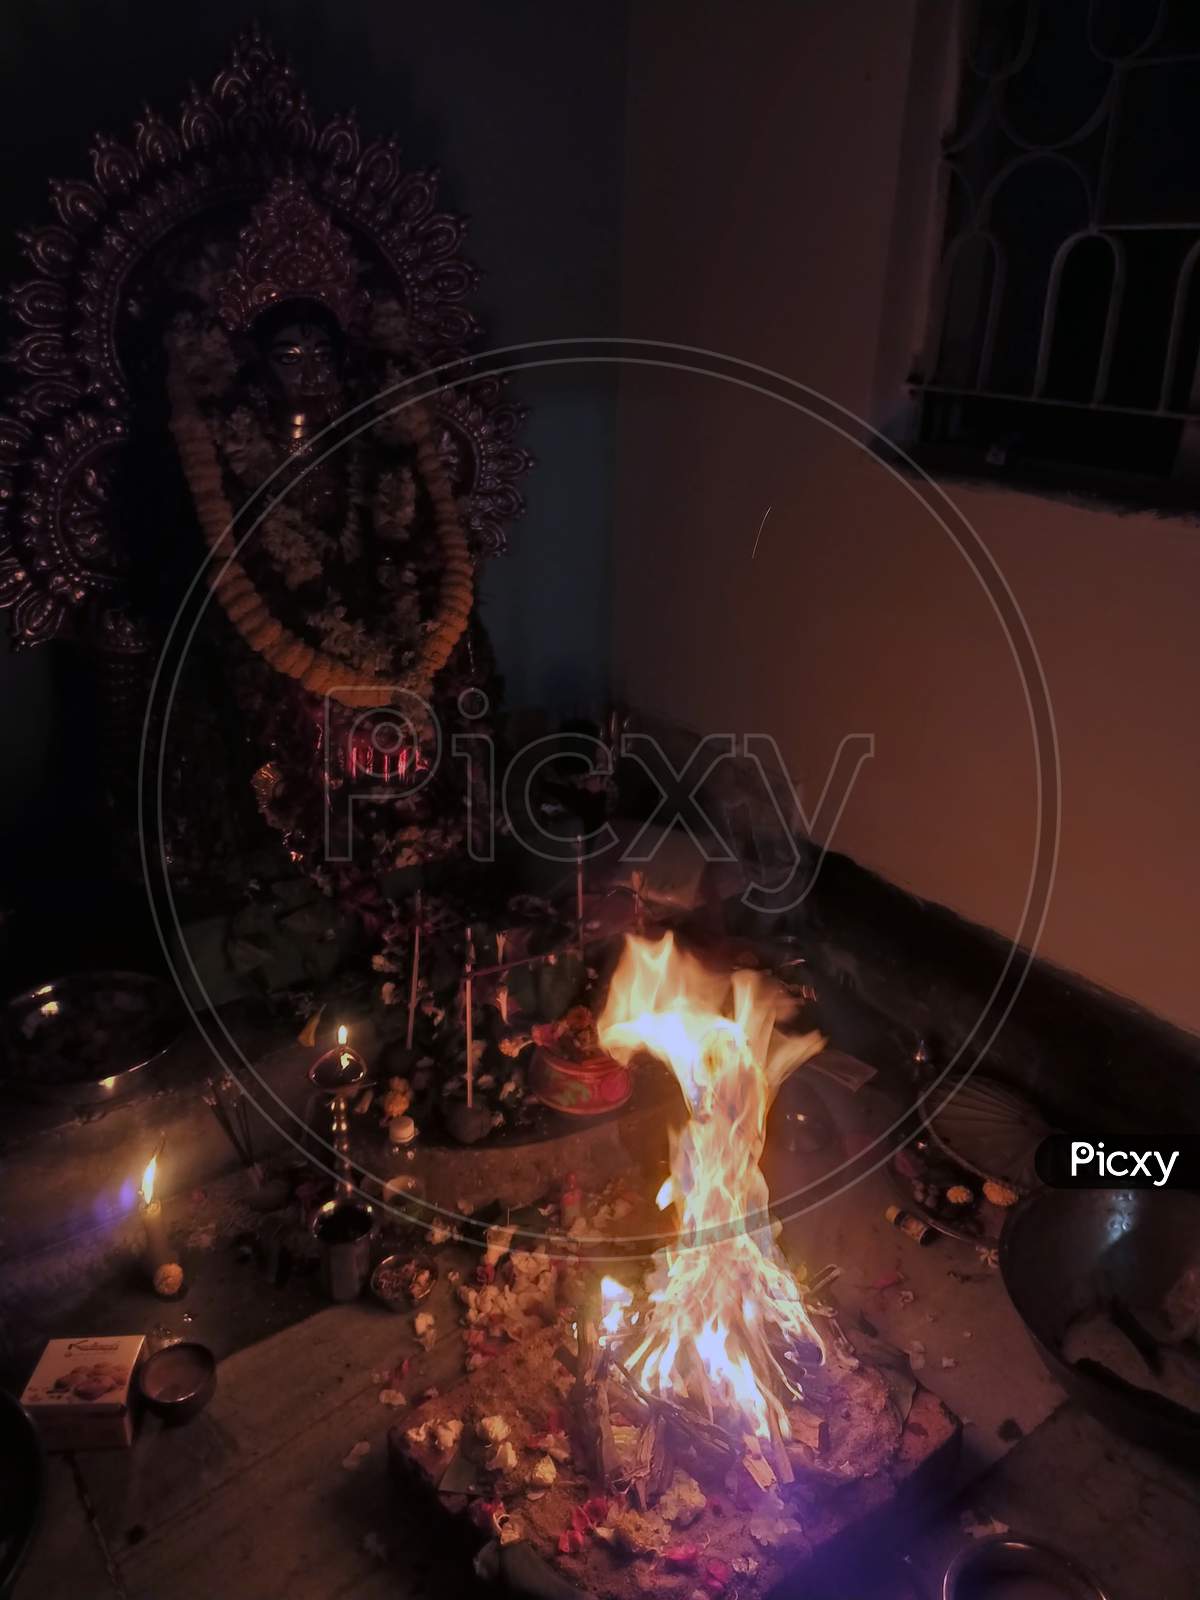 Hot blazing flames of fire. A sacred fire ritual. A puja procedure using Havan kund.